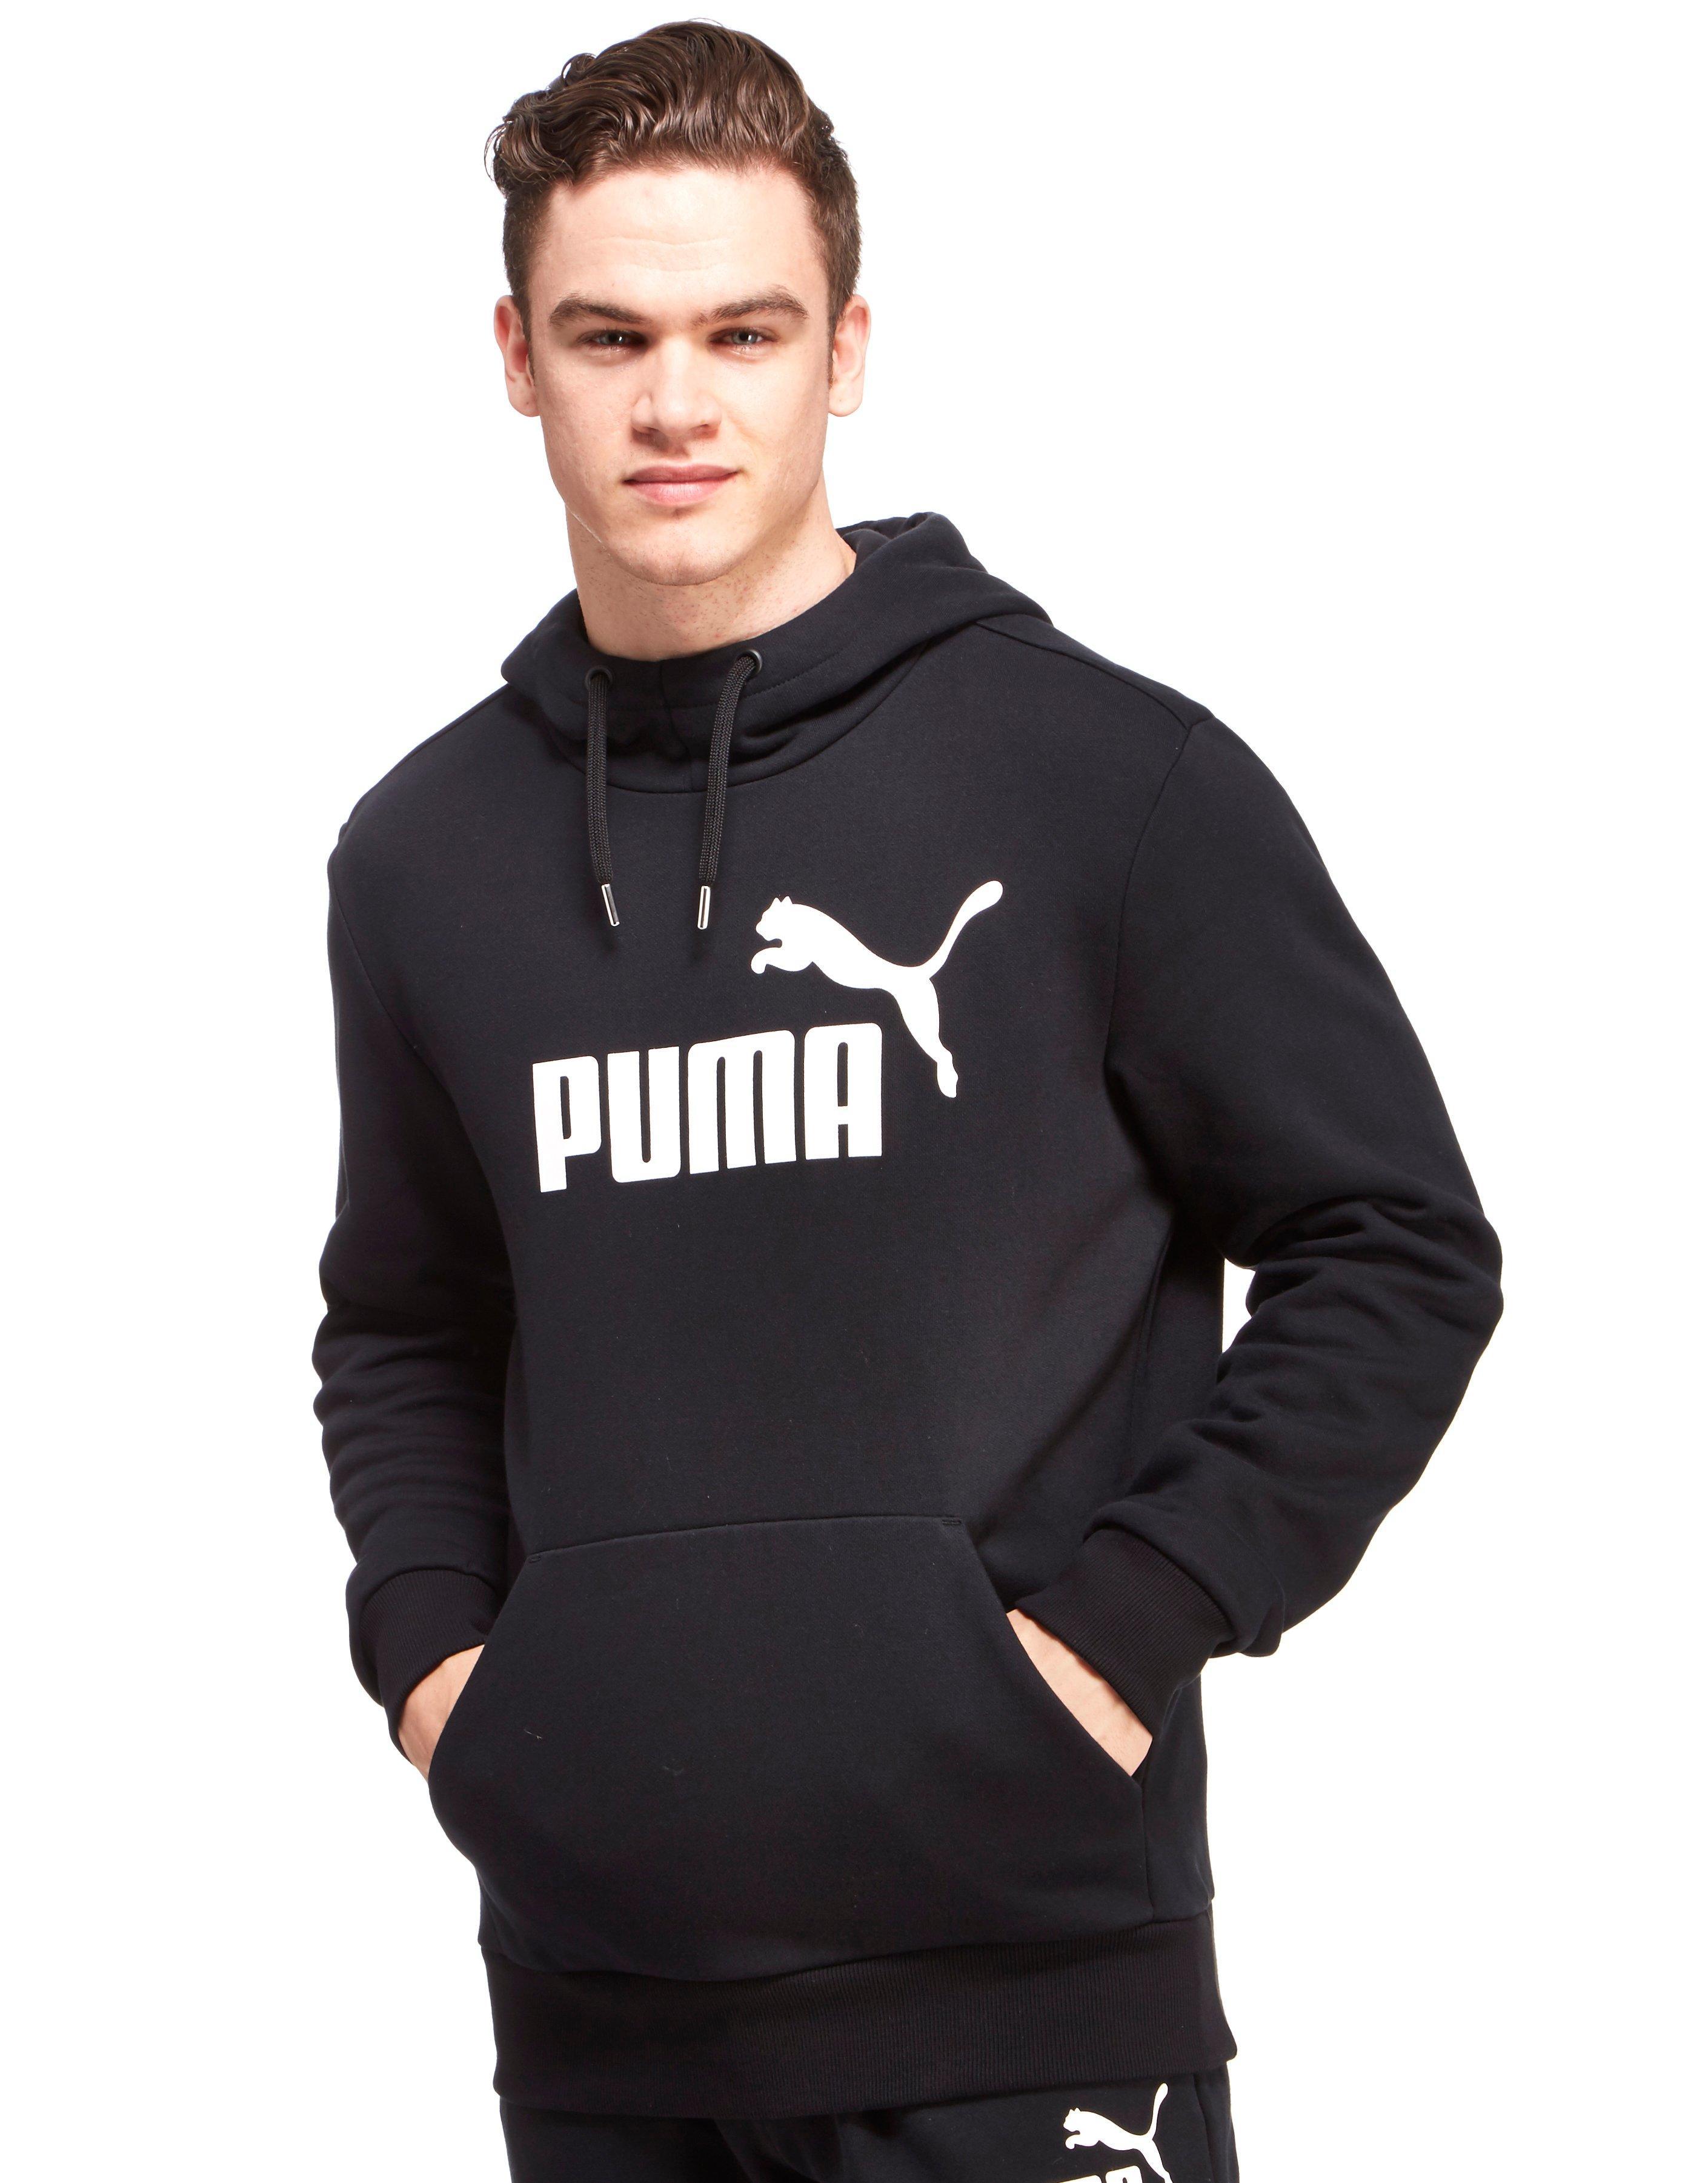 puma core sweatshirt